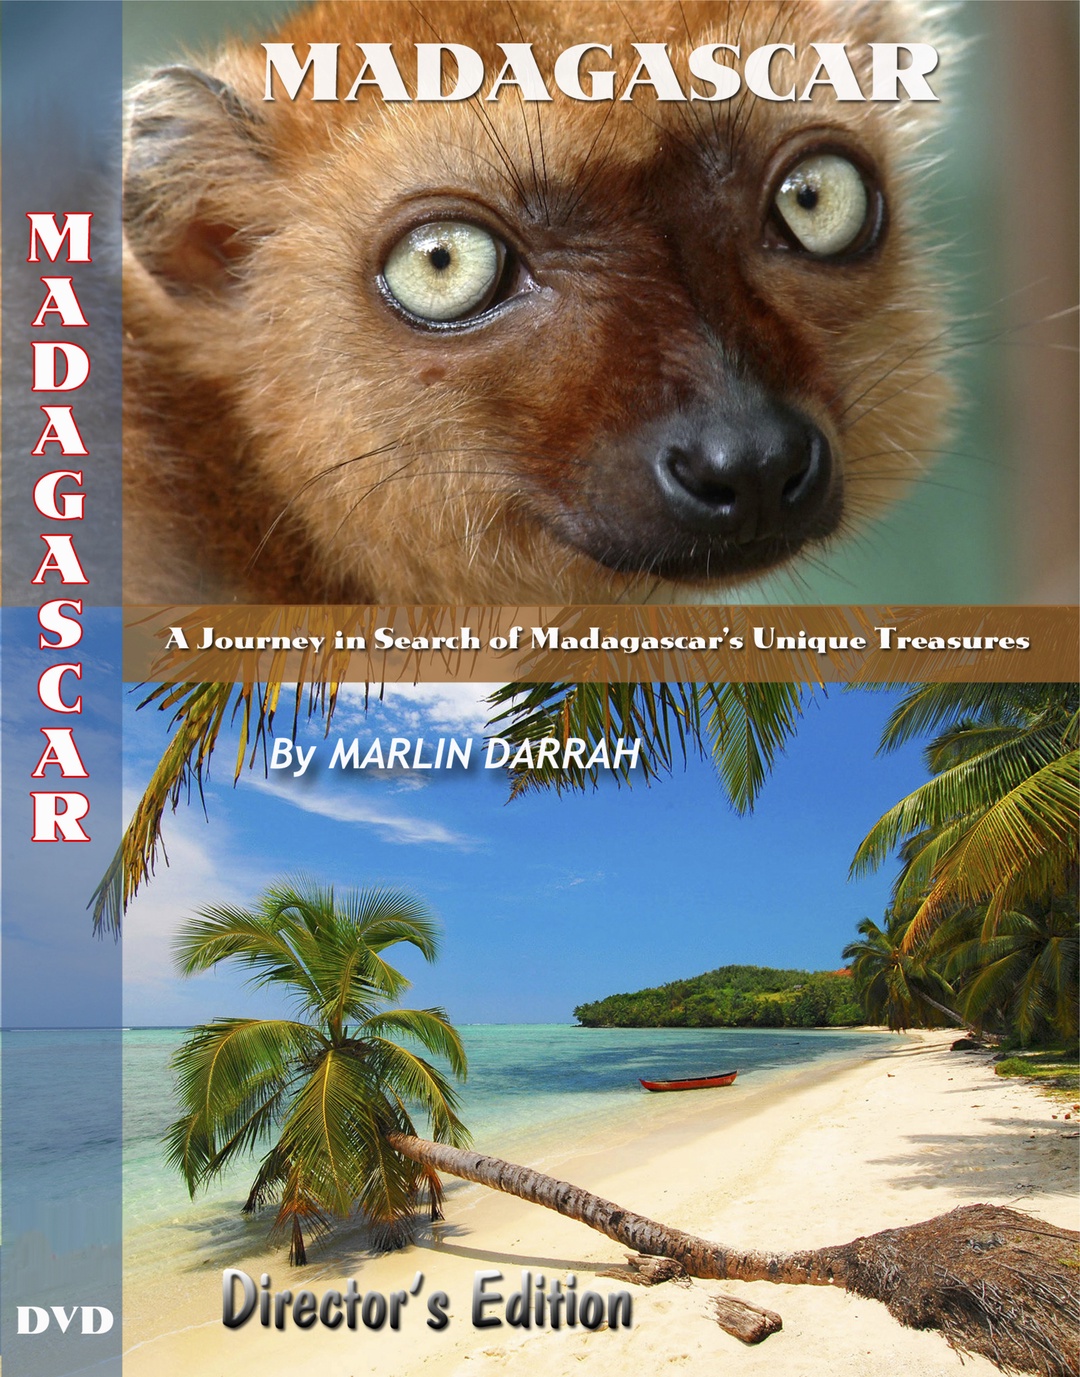 Marlin Darrah's Madagascar